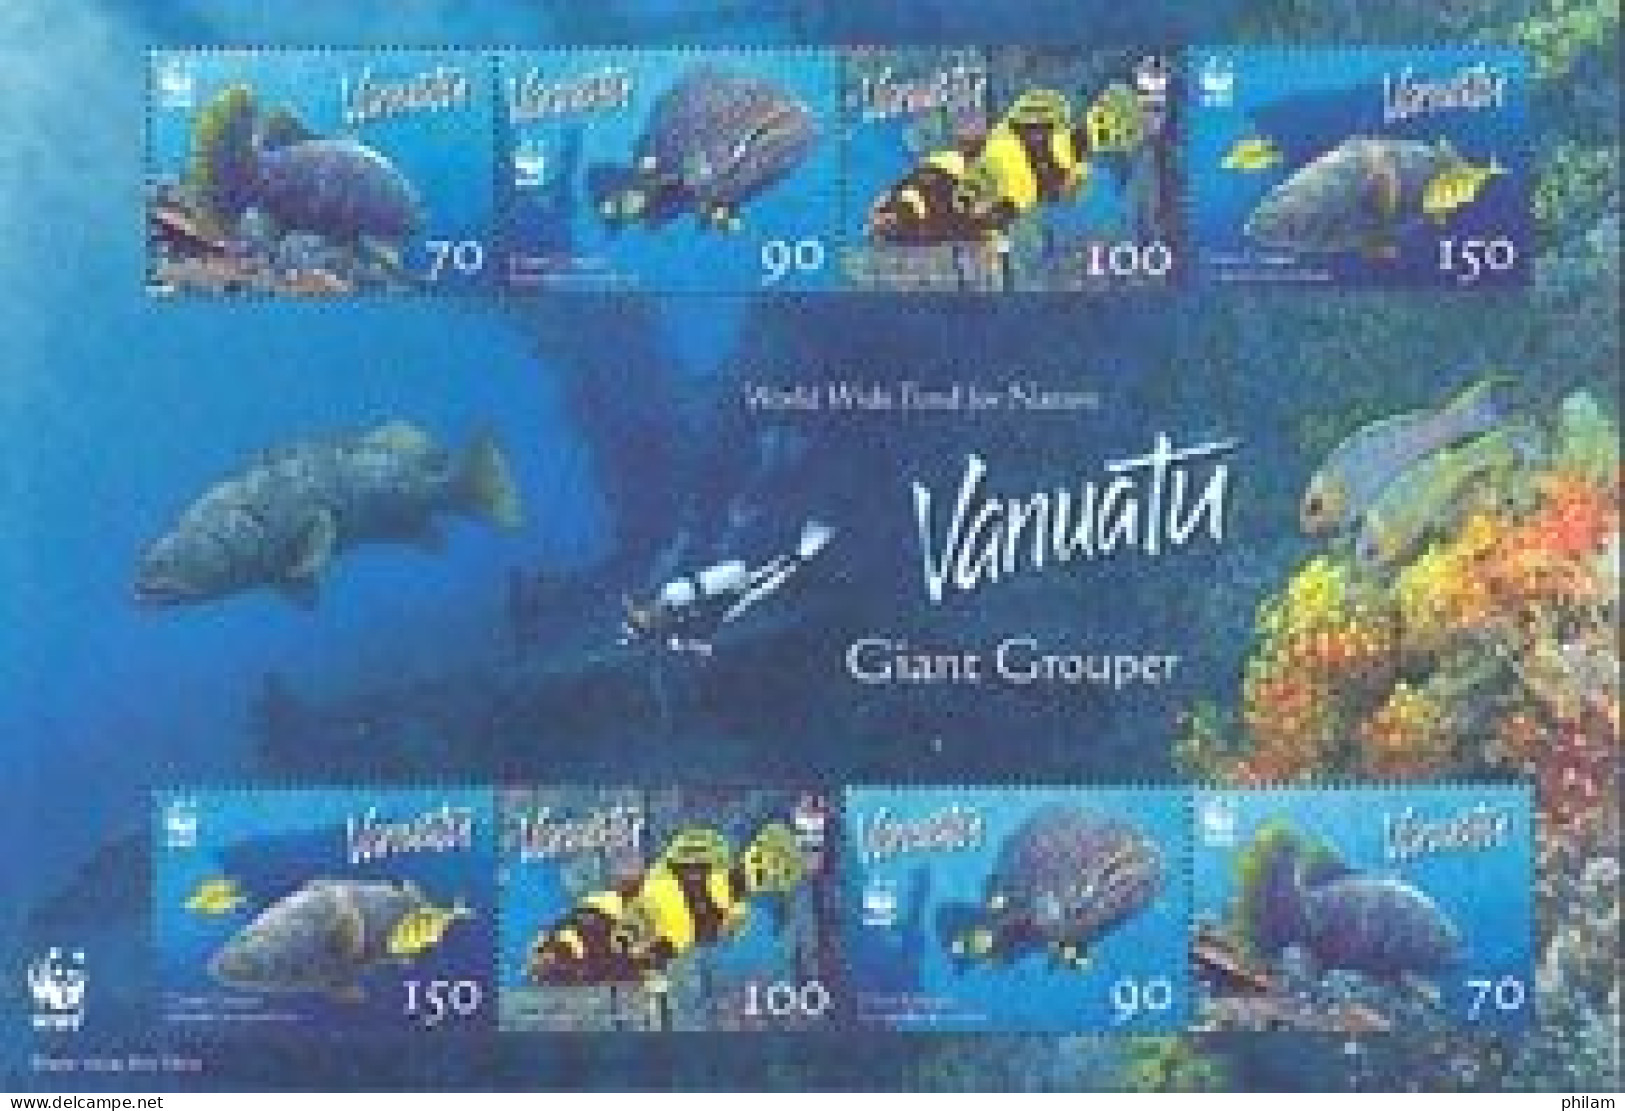 VANUATU 2006 - W.W.F. - Giant Grouper - Feuillet De 2 Séries De 4 V. - Fische